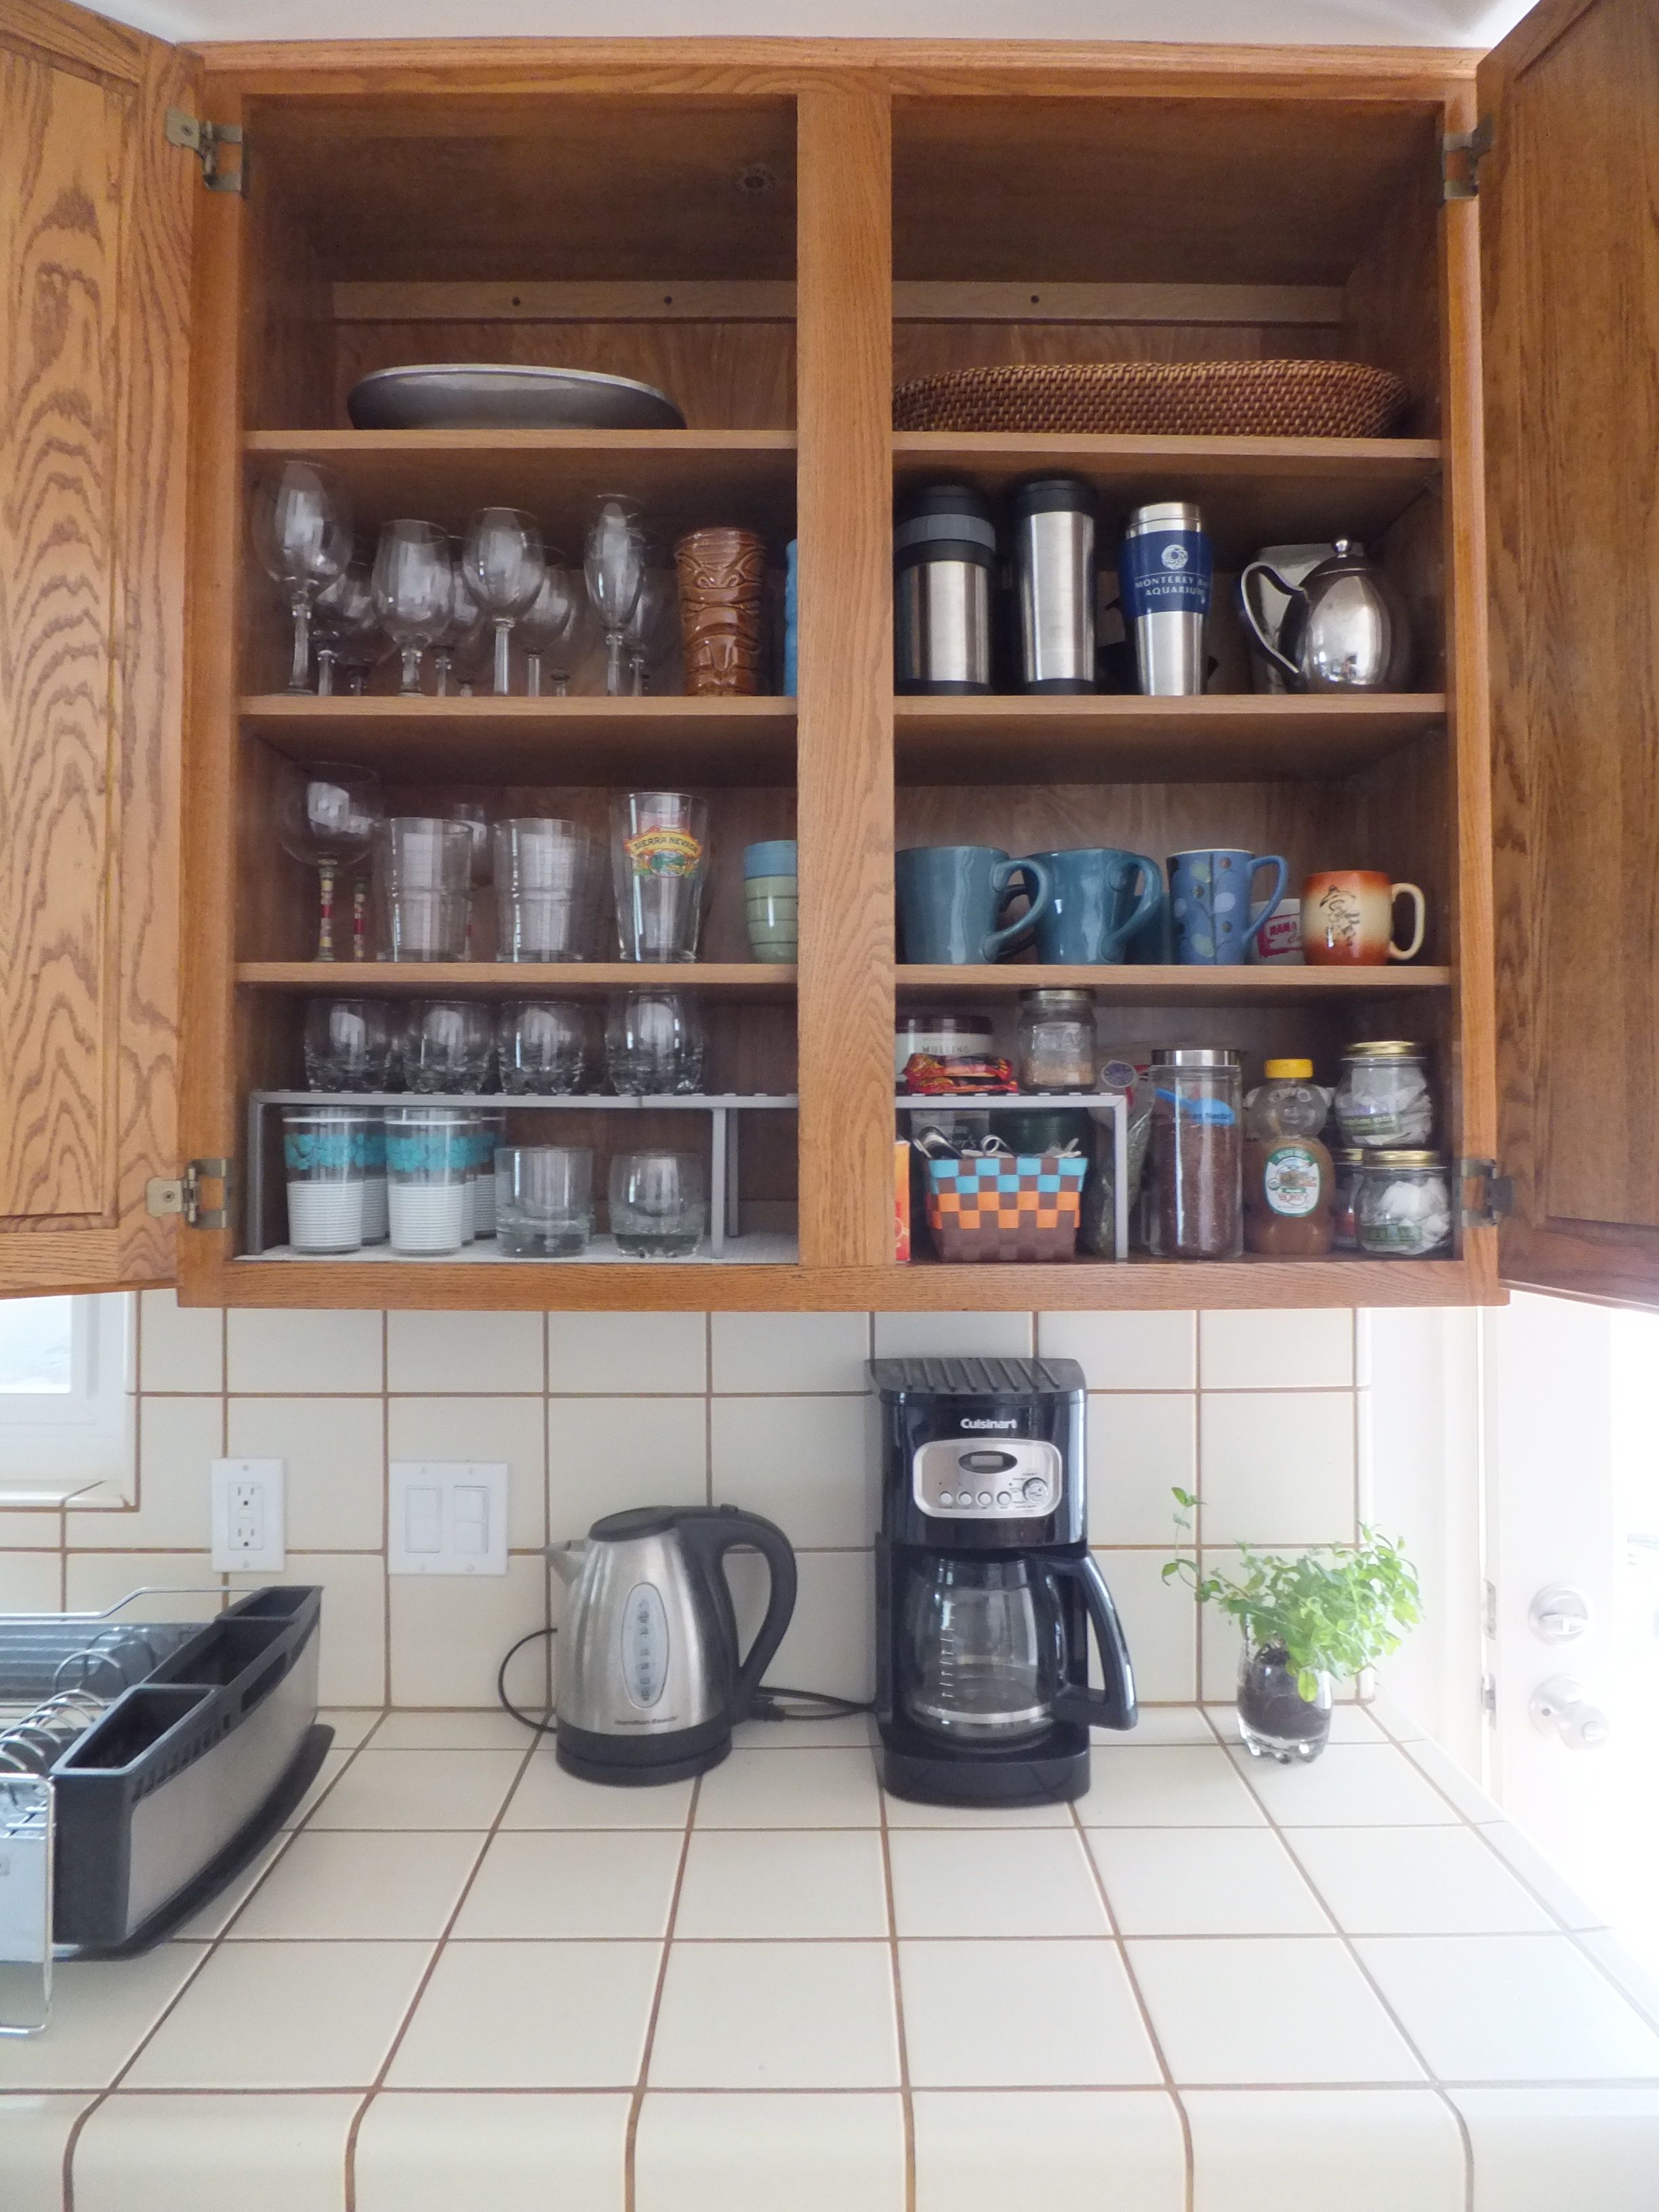 https://149453710.v2.pressablecdn.com/wp-content/uploads/2013/04/bella-kitchen-organizing-drink-cabinet-1.jpg